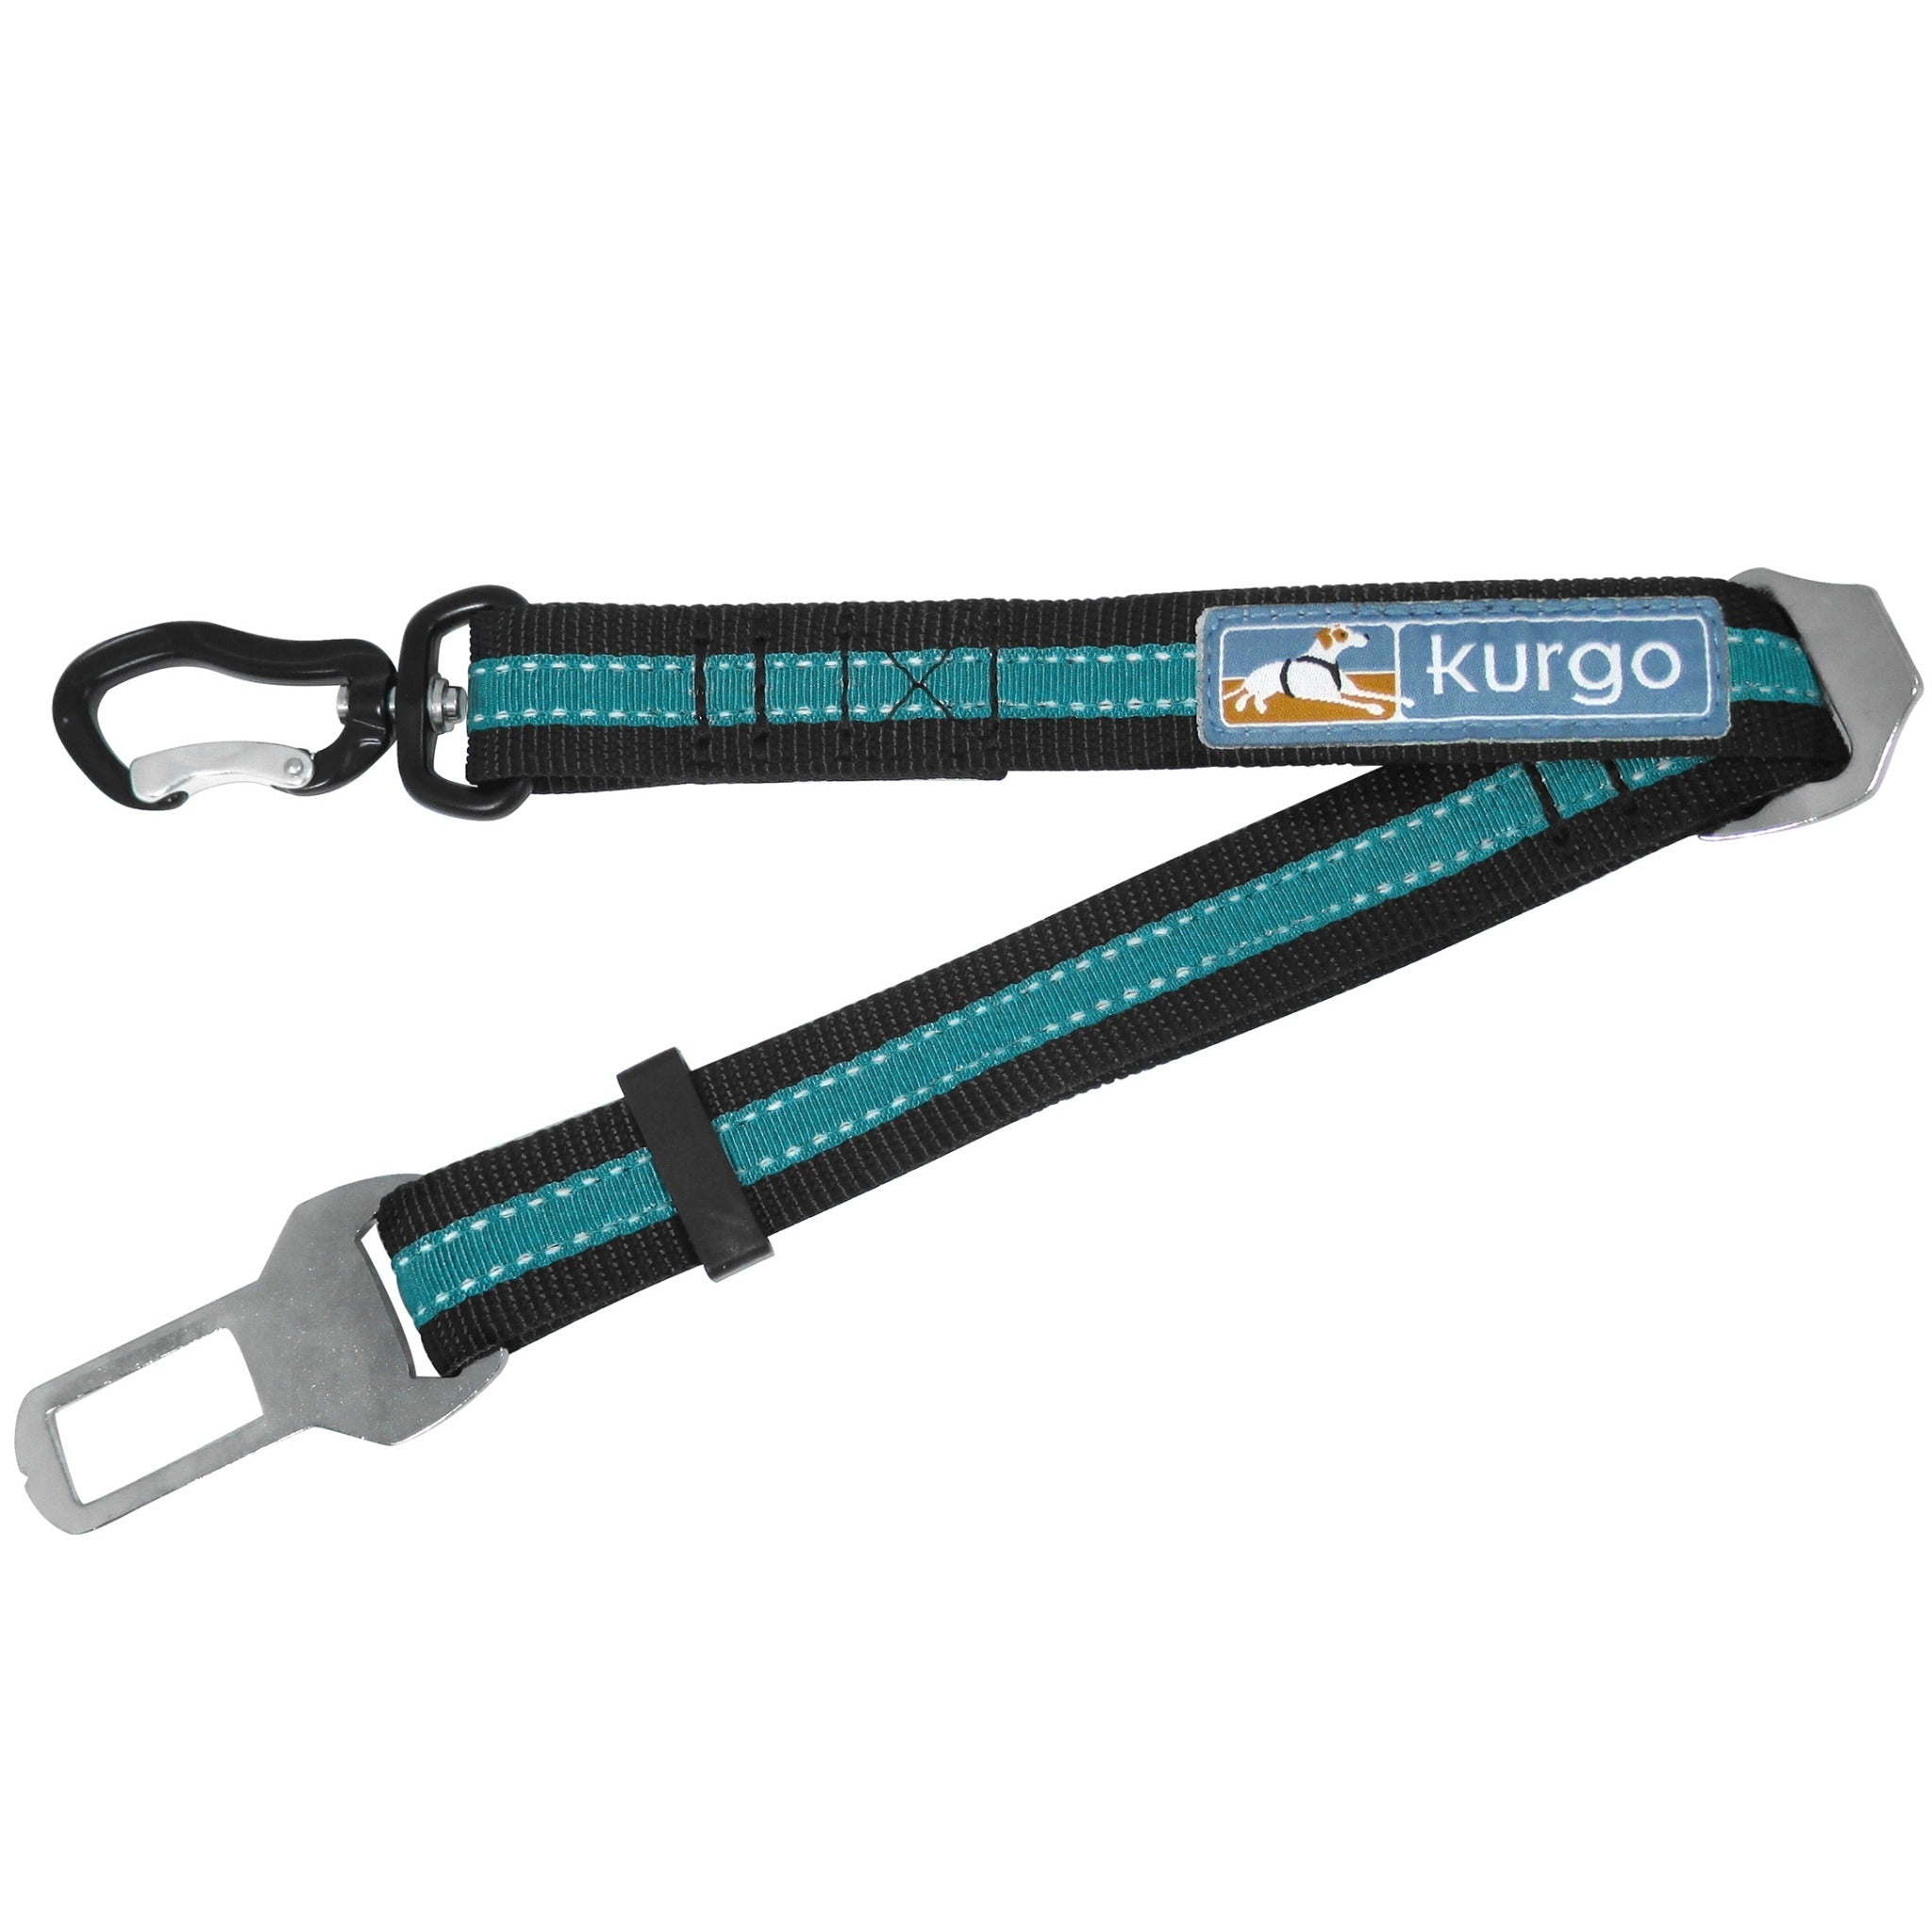 Kurgo Direct to Seatbelt Swivel Tether, Dog Car Belt